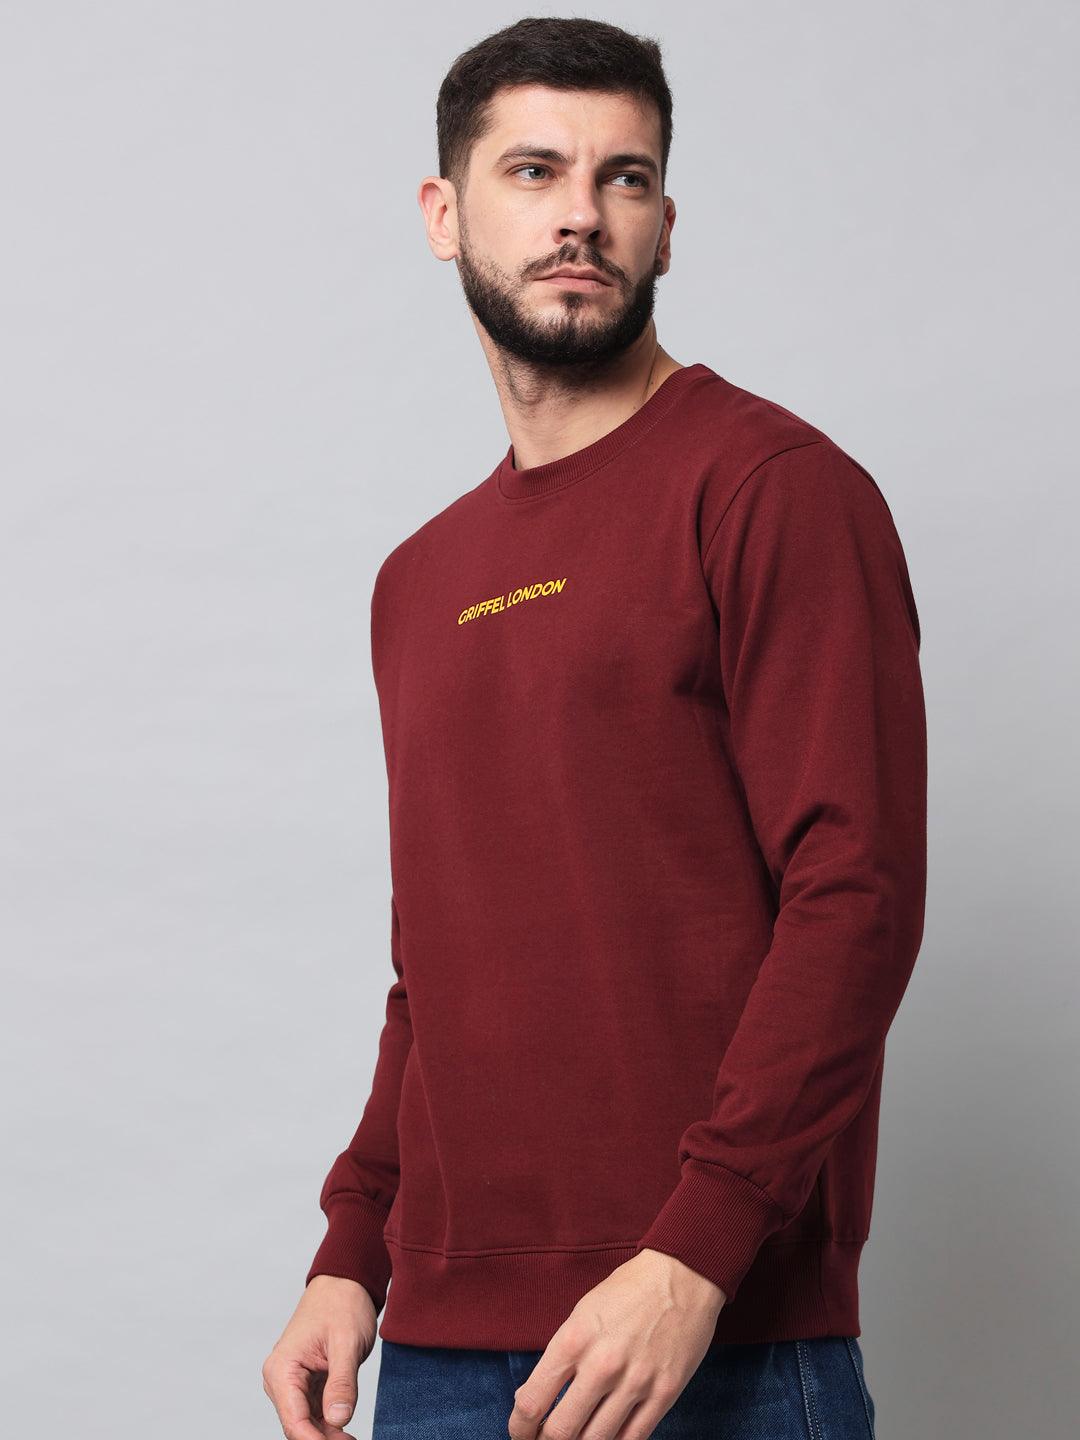 Griffel Men's Cotton Fleece Round Neck Maroon Sweatshirt with Full Sleeve and Front Logo Print - griffel